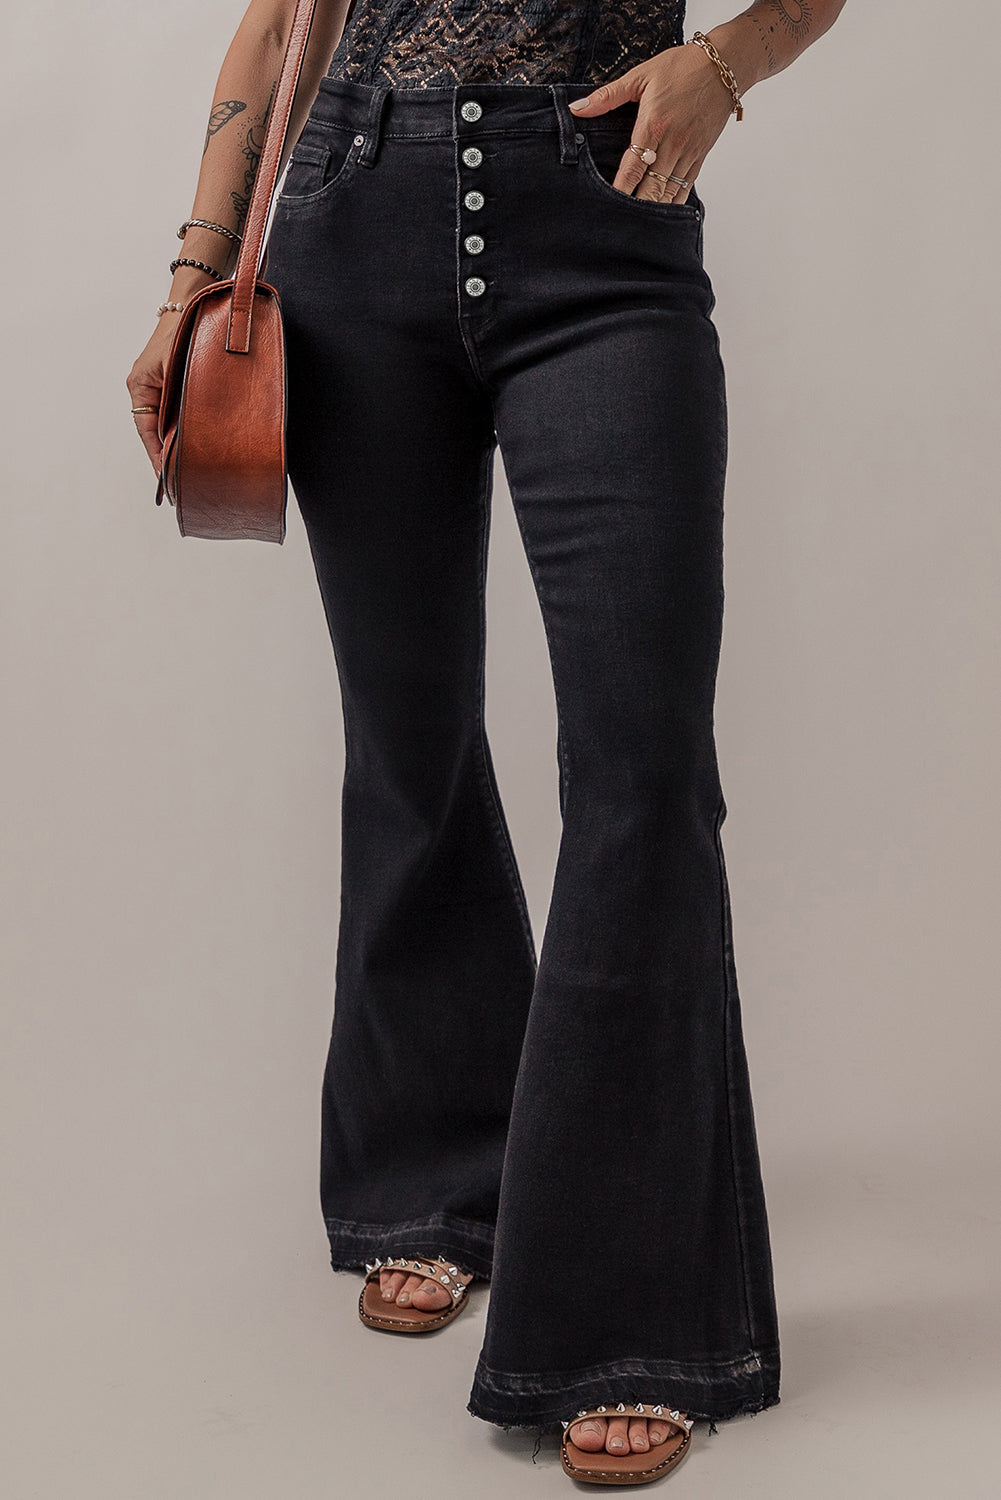 Black high waist button front flare jeans - 10 / 71% cotton + 27.5% polyester + 1.5% elastane